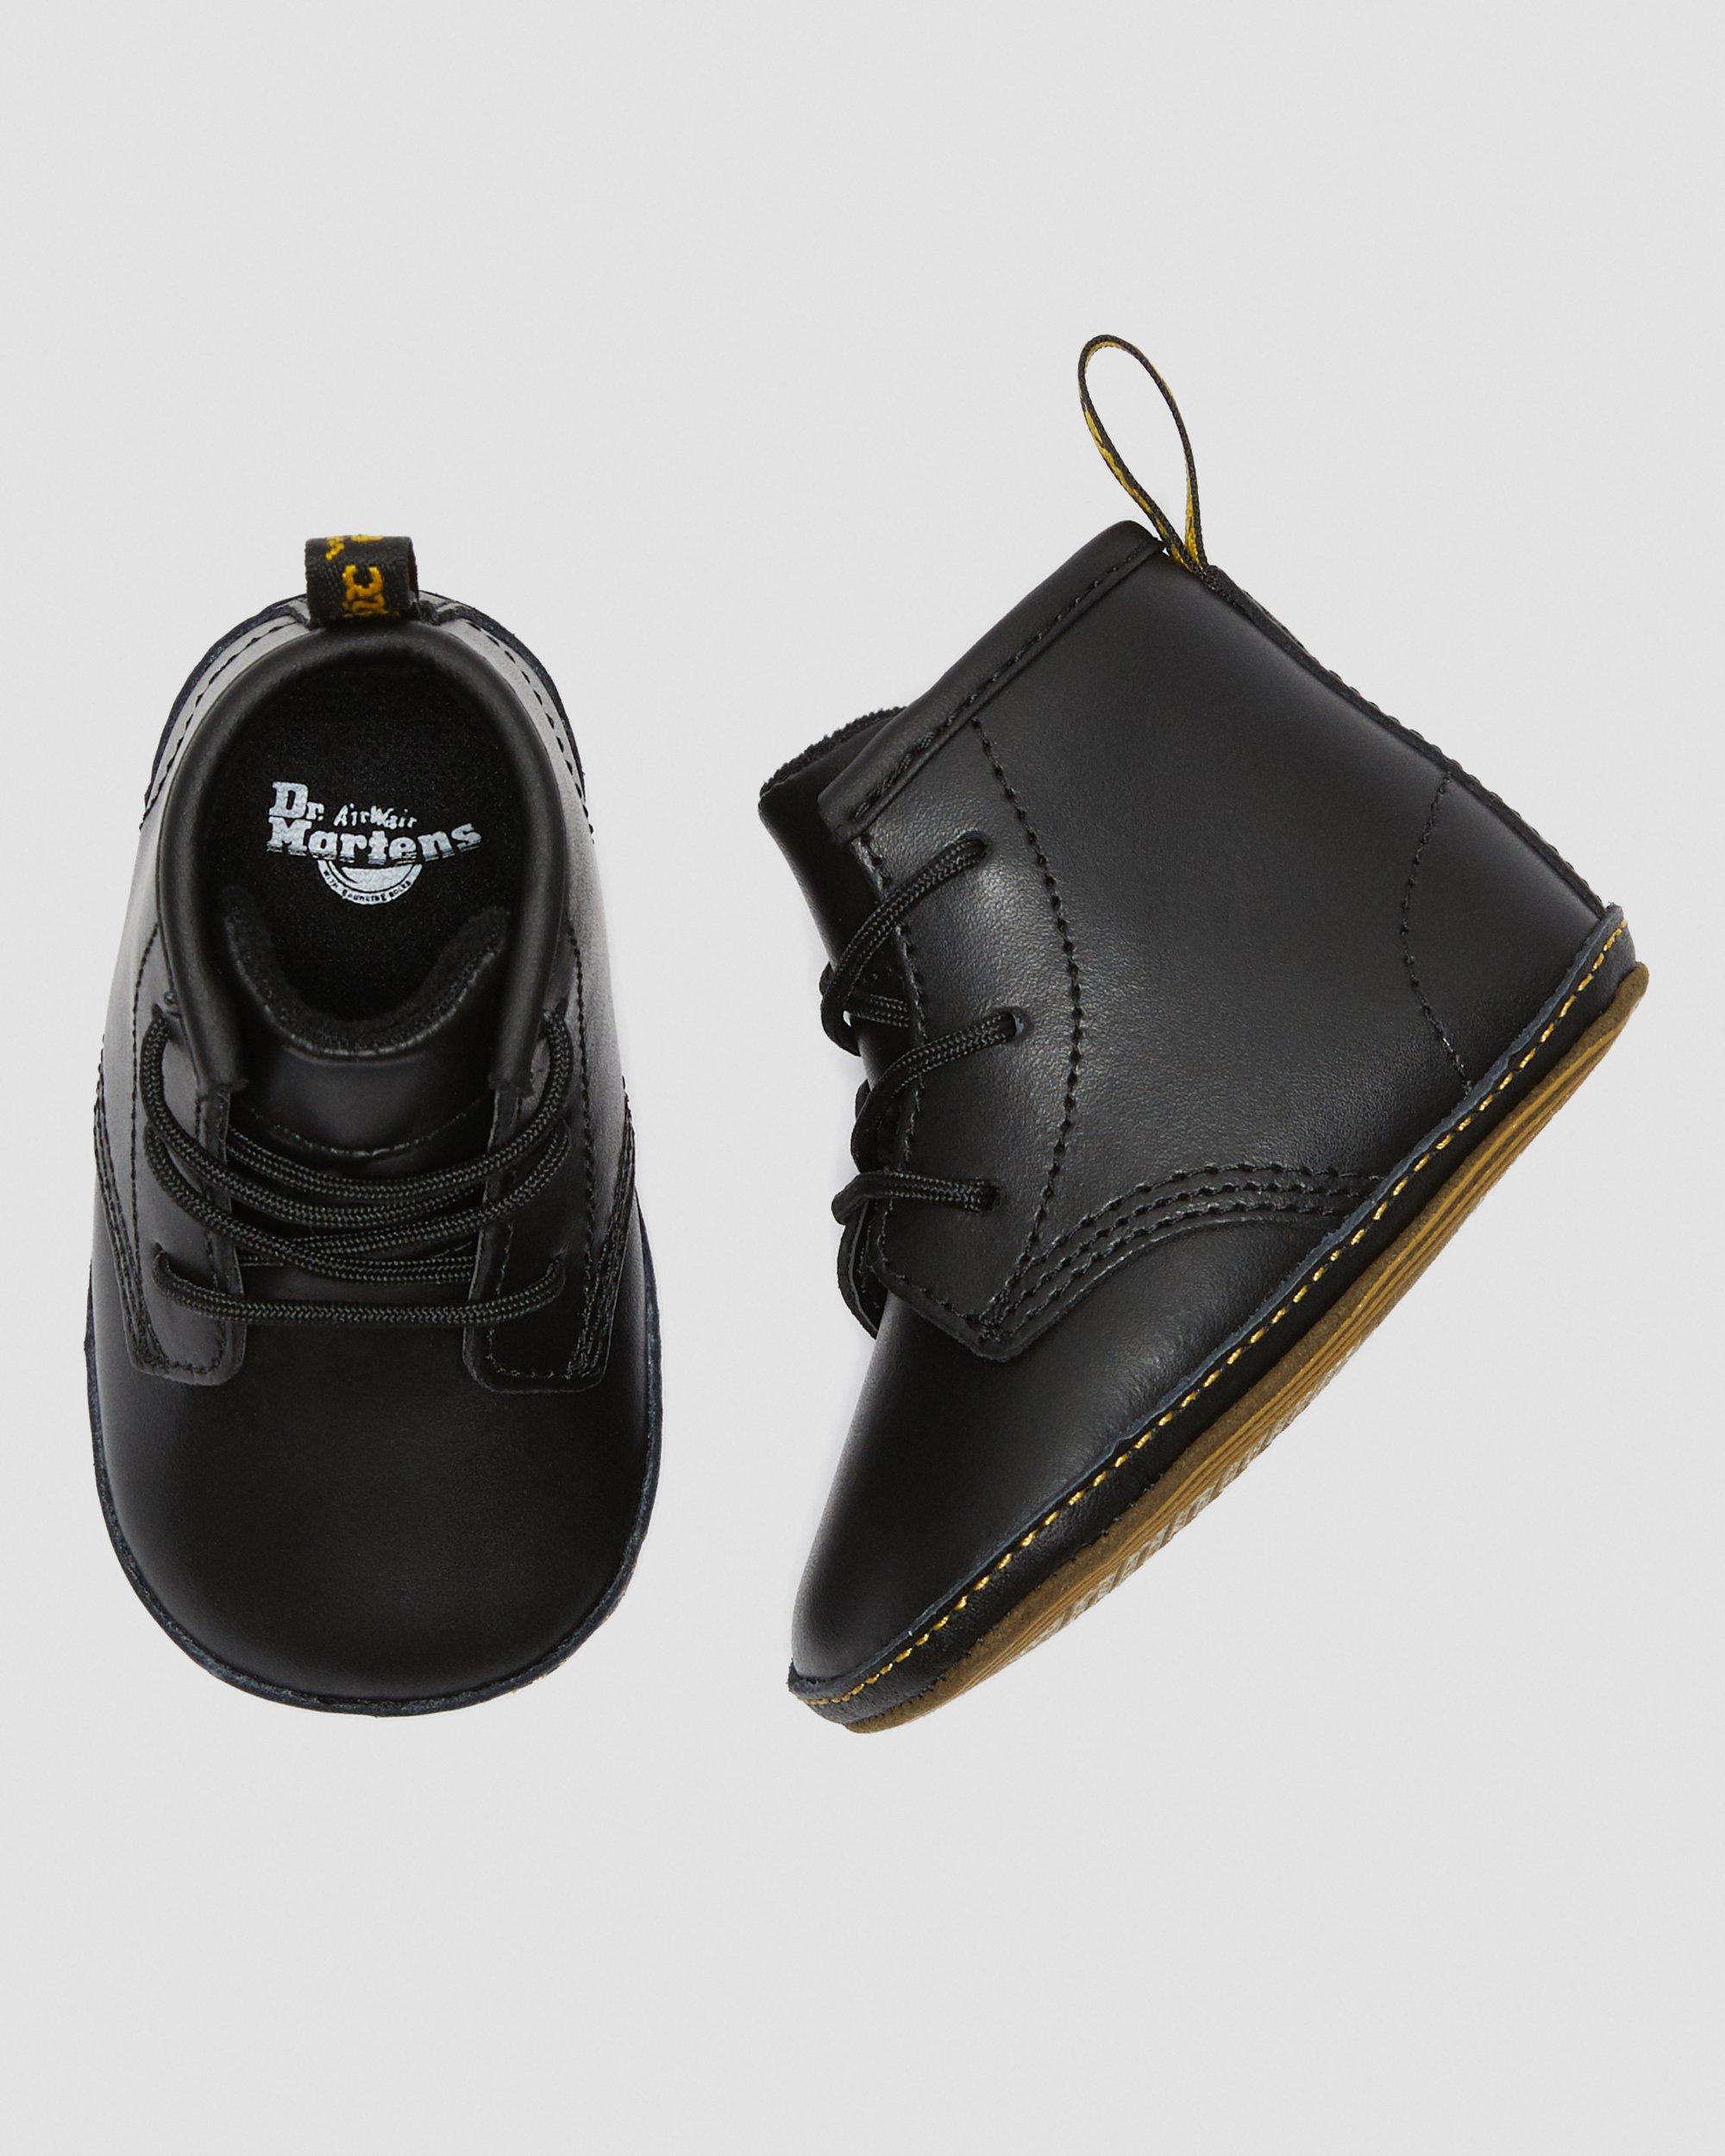 Newborn 1460 Auburn Leather Booties in Black